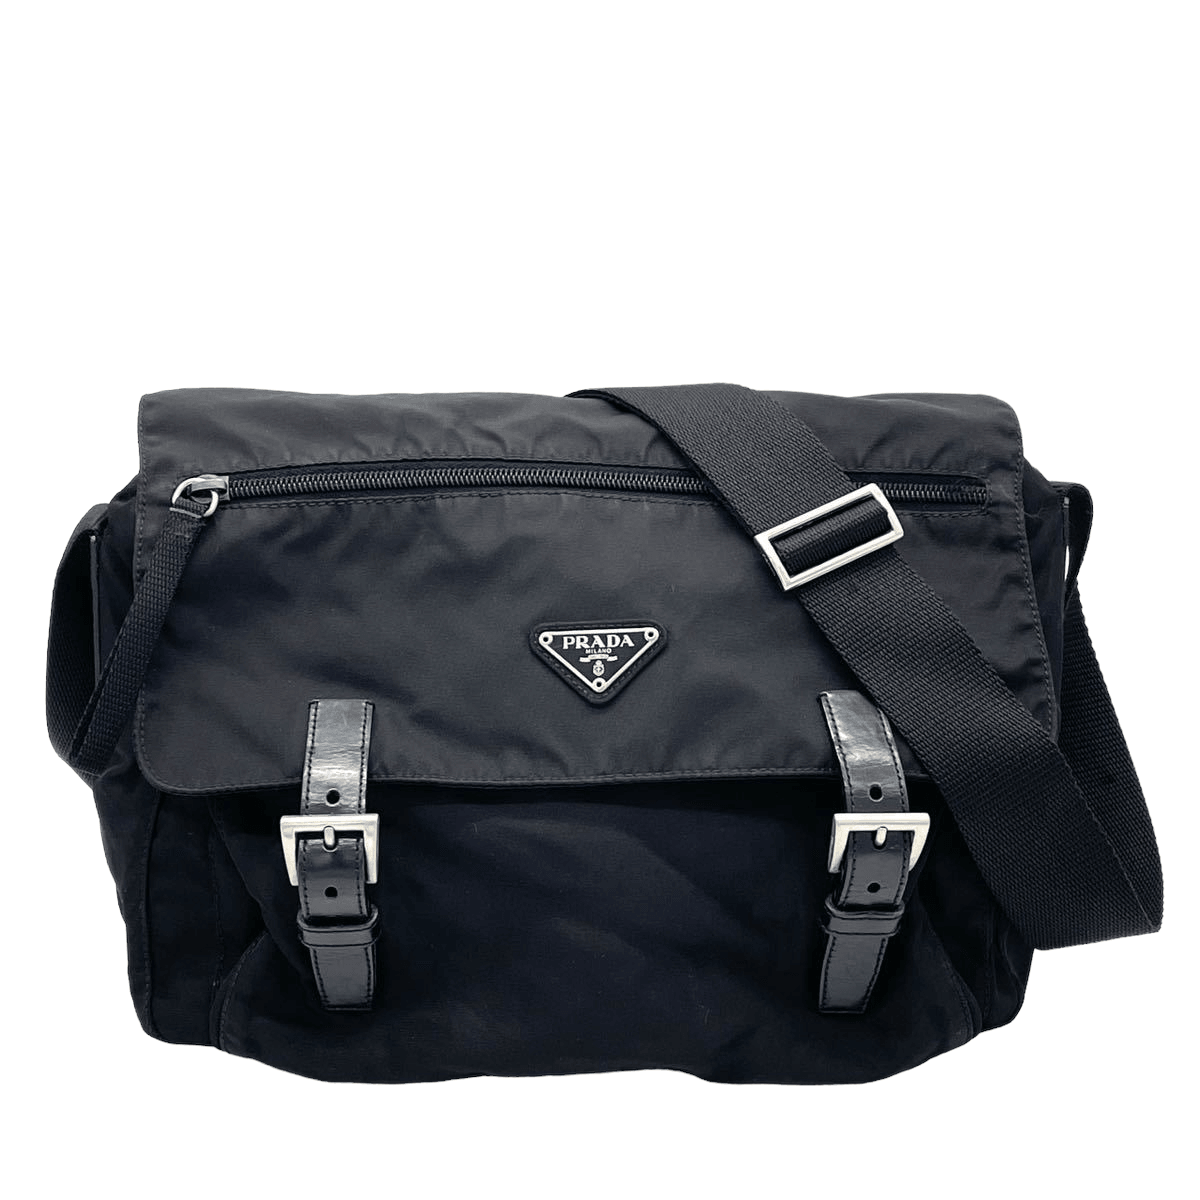 Prada Pocono Taste nylon leather black black flap shoulder bag - Known Source